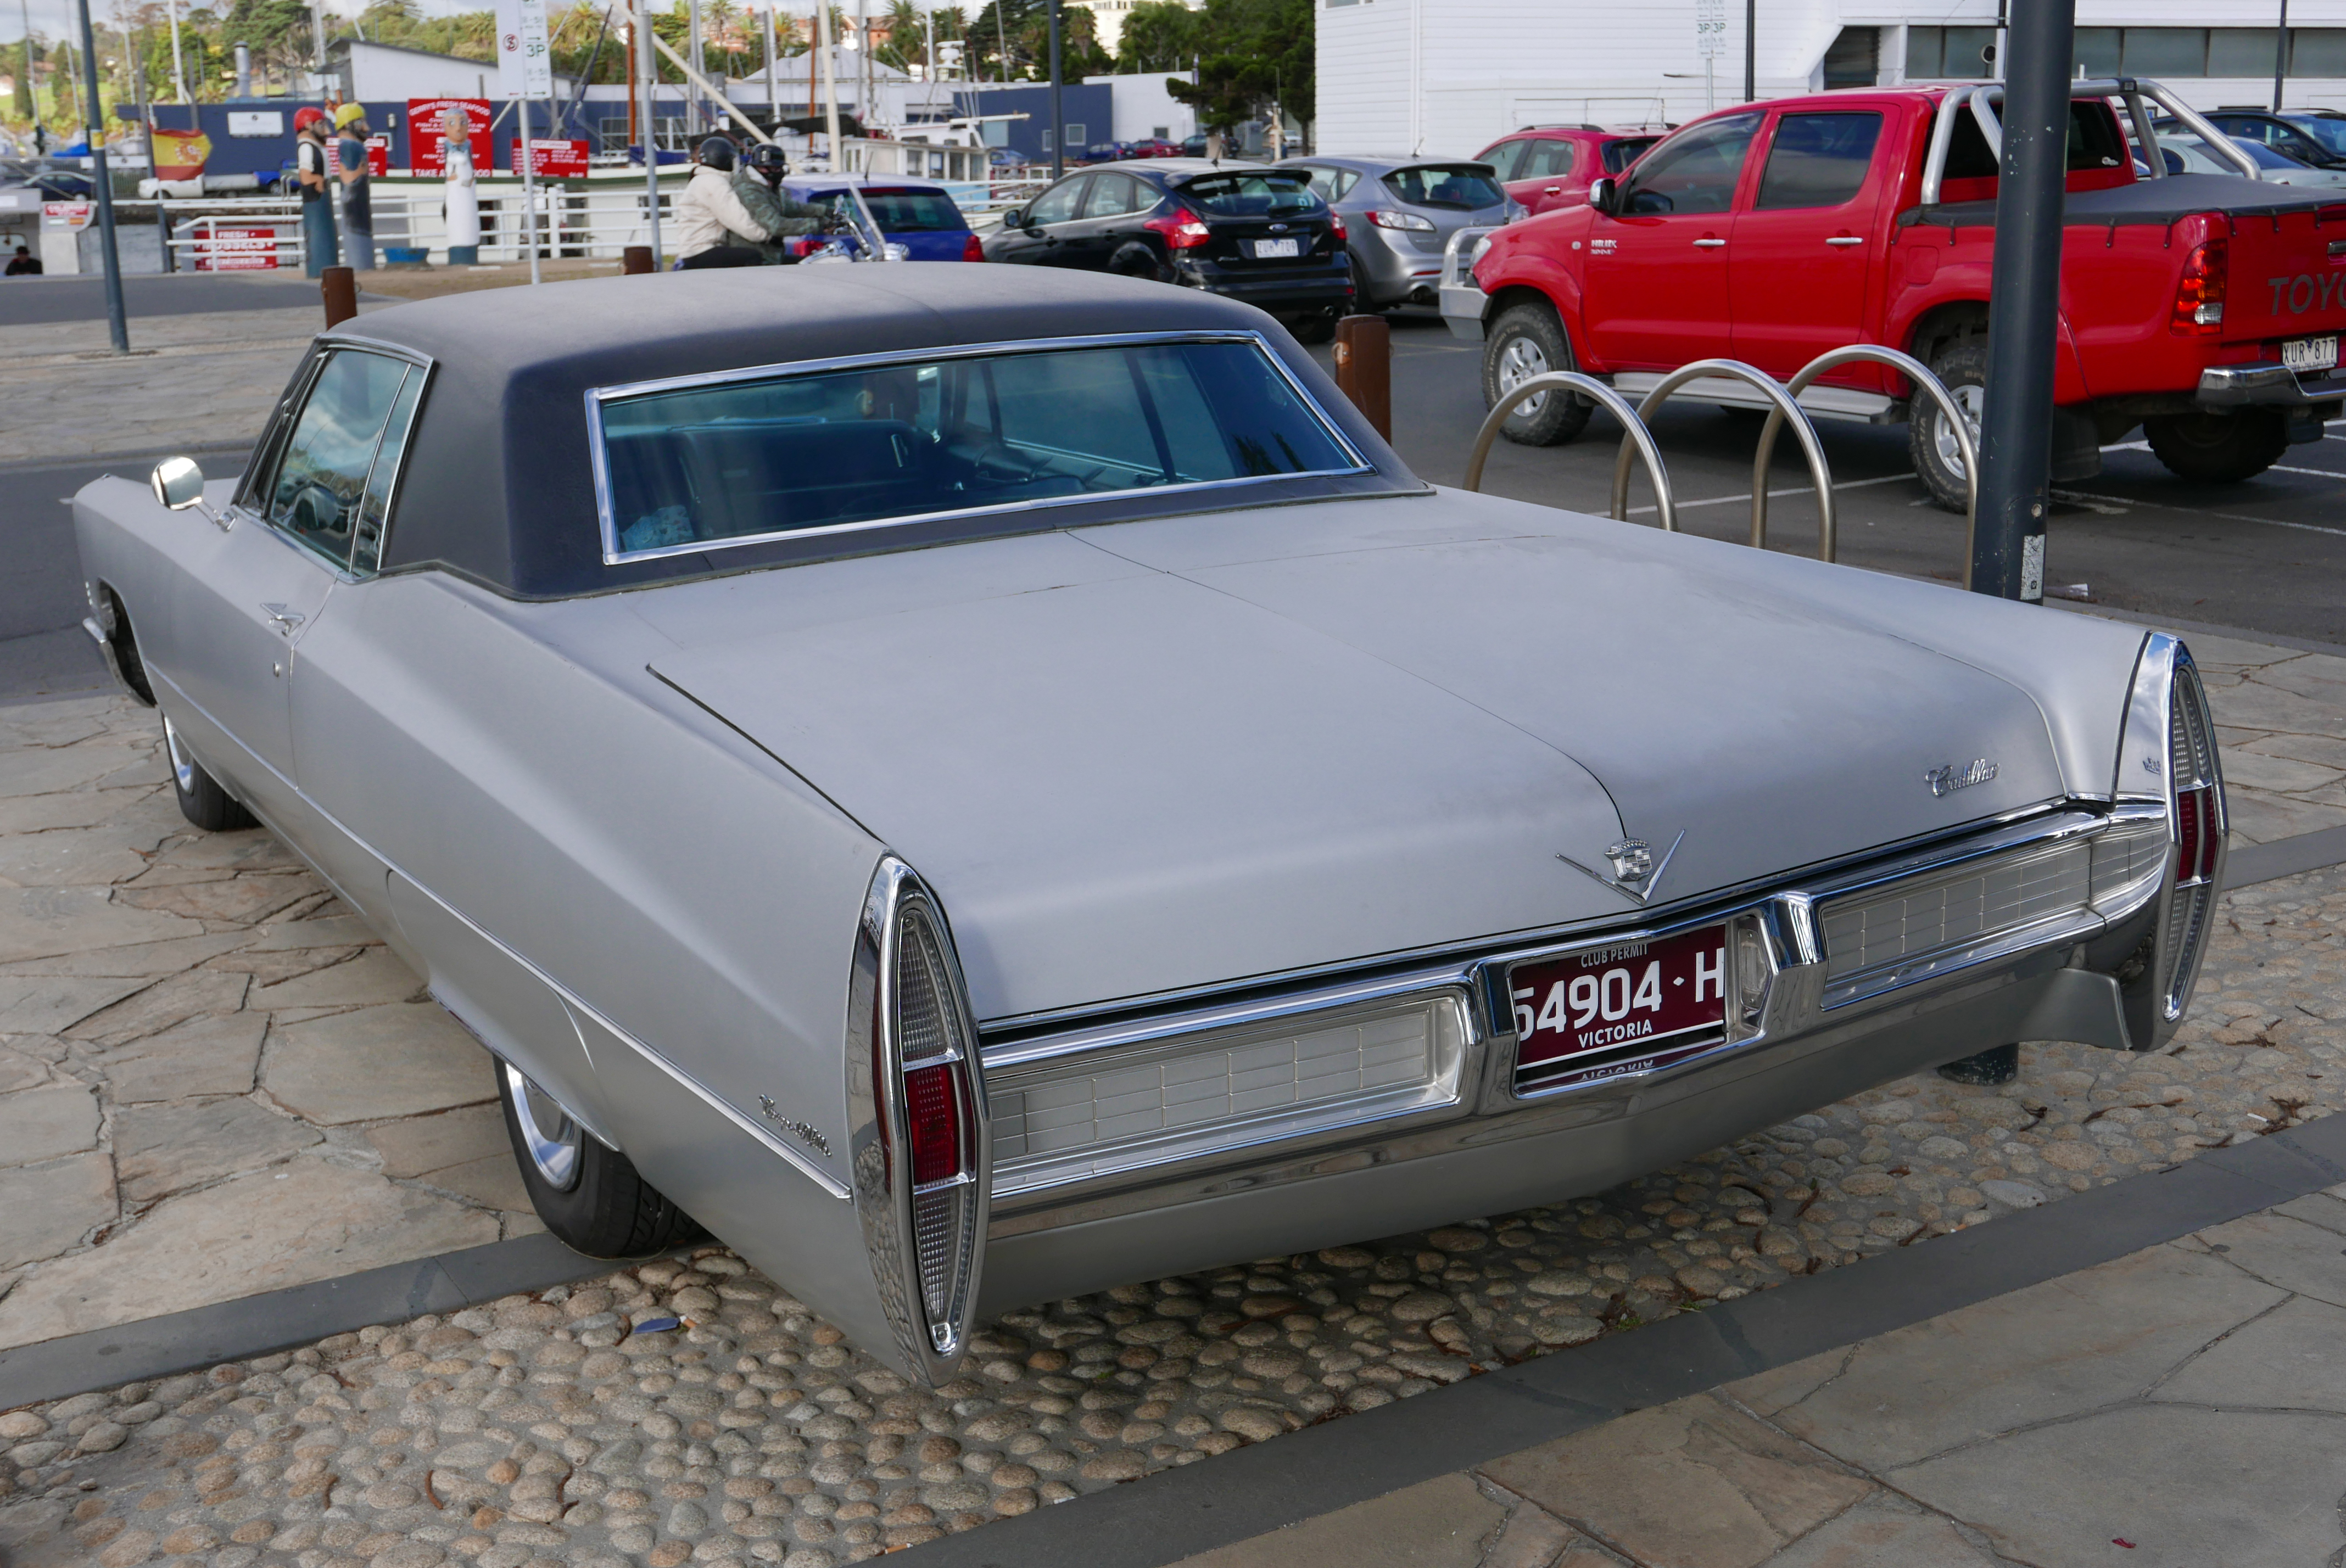 1967_Cadillac_Coupe_de_Ville_2-door_hardtop_%282015-08-02%29_02.jpg